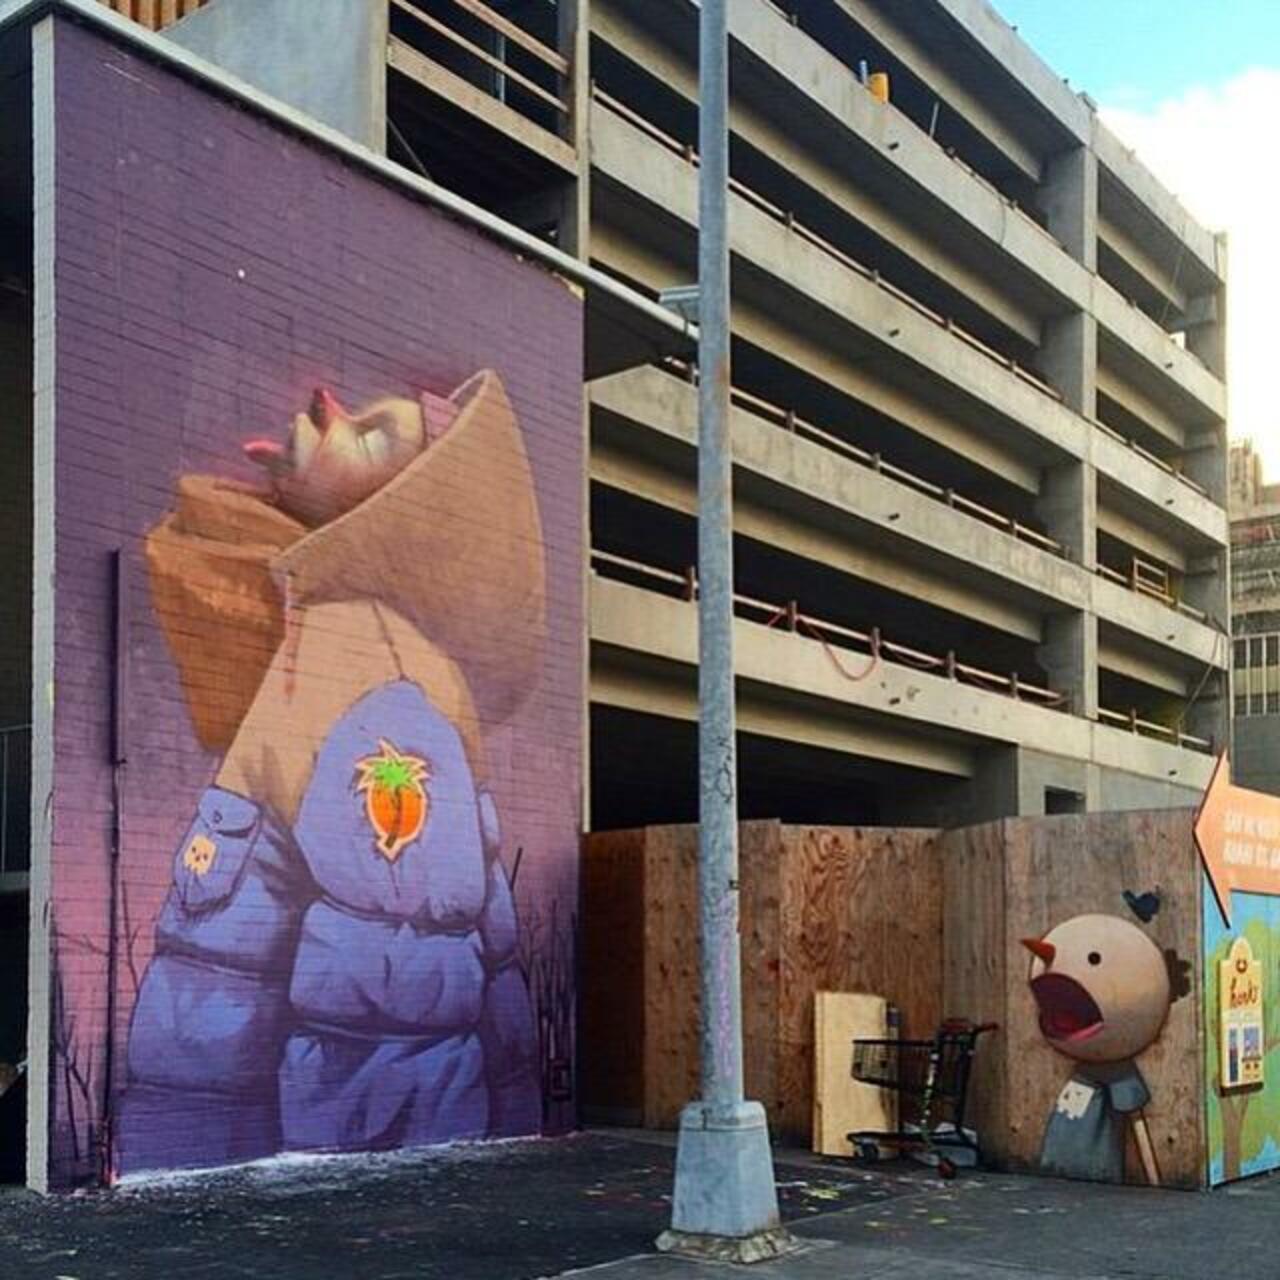 The amazing @bezt_etam & @sainer_etam for @POWWOWHAWAII #mural #graffiti #streetart #urbanart #powwowhawaii http://t.co/ekY72Ur2FA